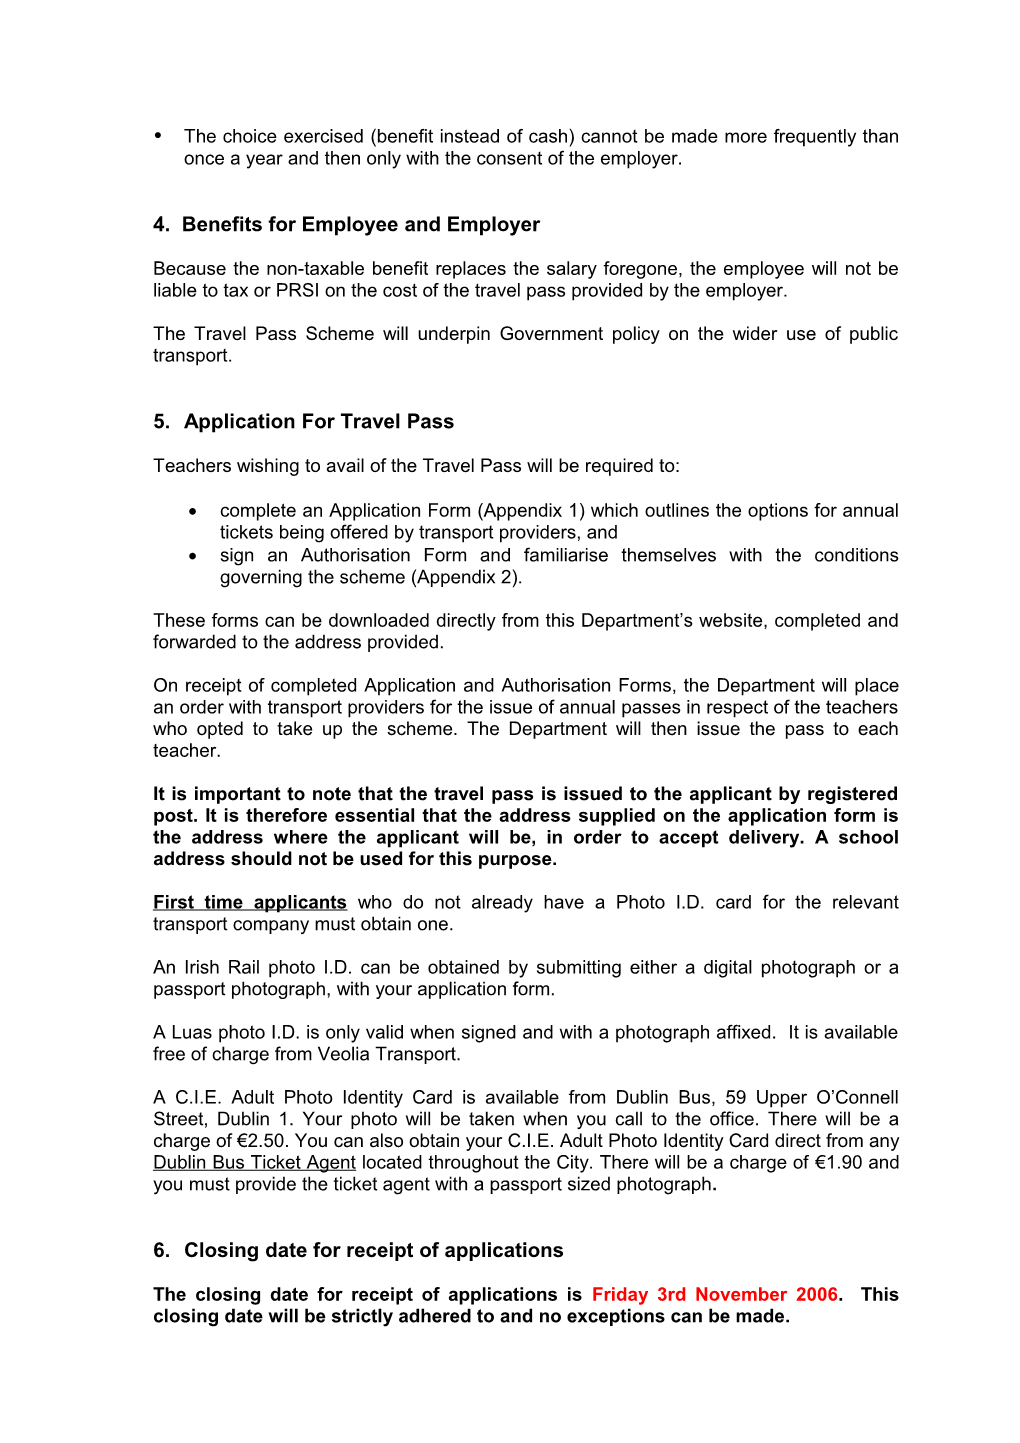 Circular 132/2006 - Travel Pass Scheme for Teachers (Tax Saver Communter Ticket) (File